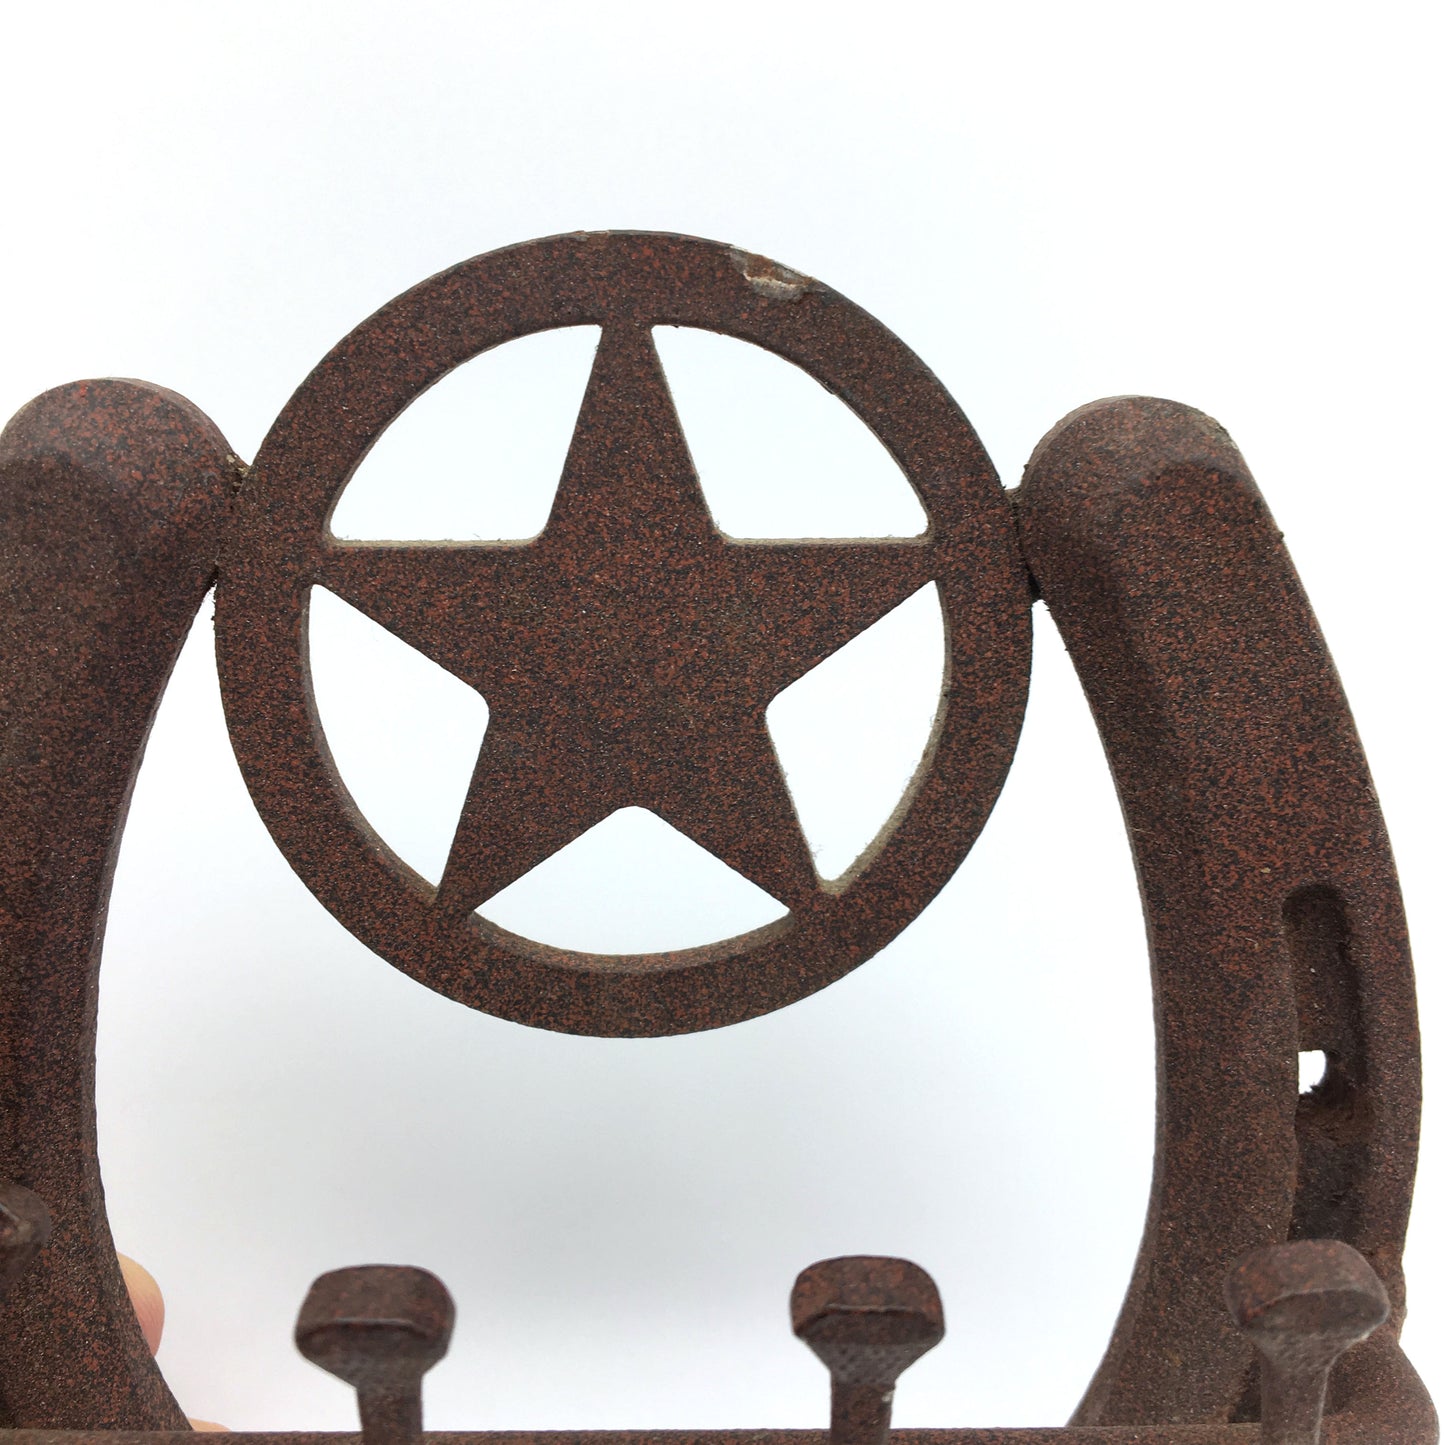 Rustic Western Cast Iron Horshoe Star Mount Hanger Rack- Handmade - 4 hooks